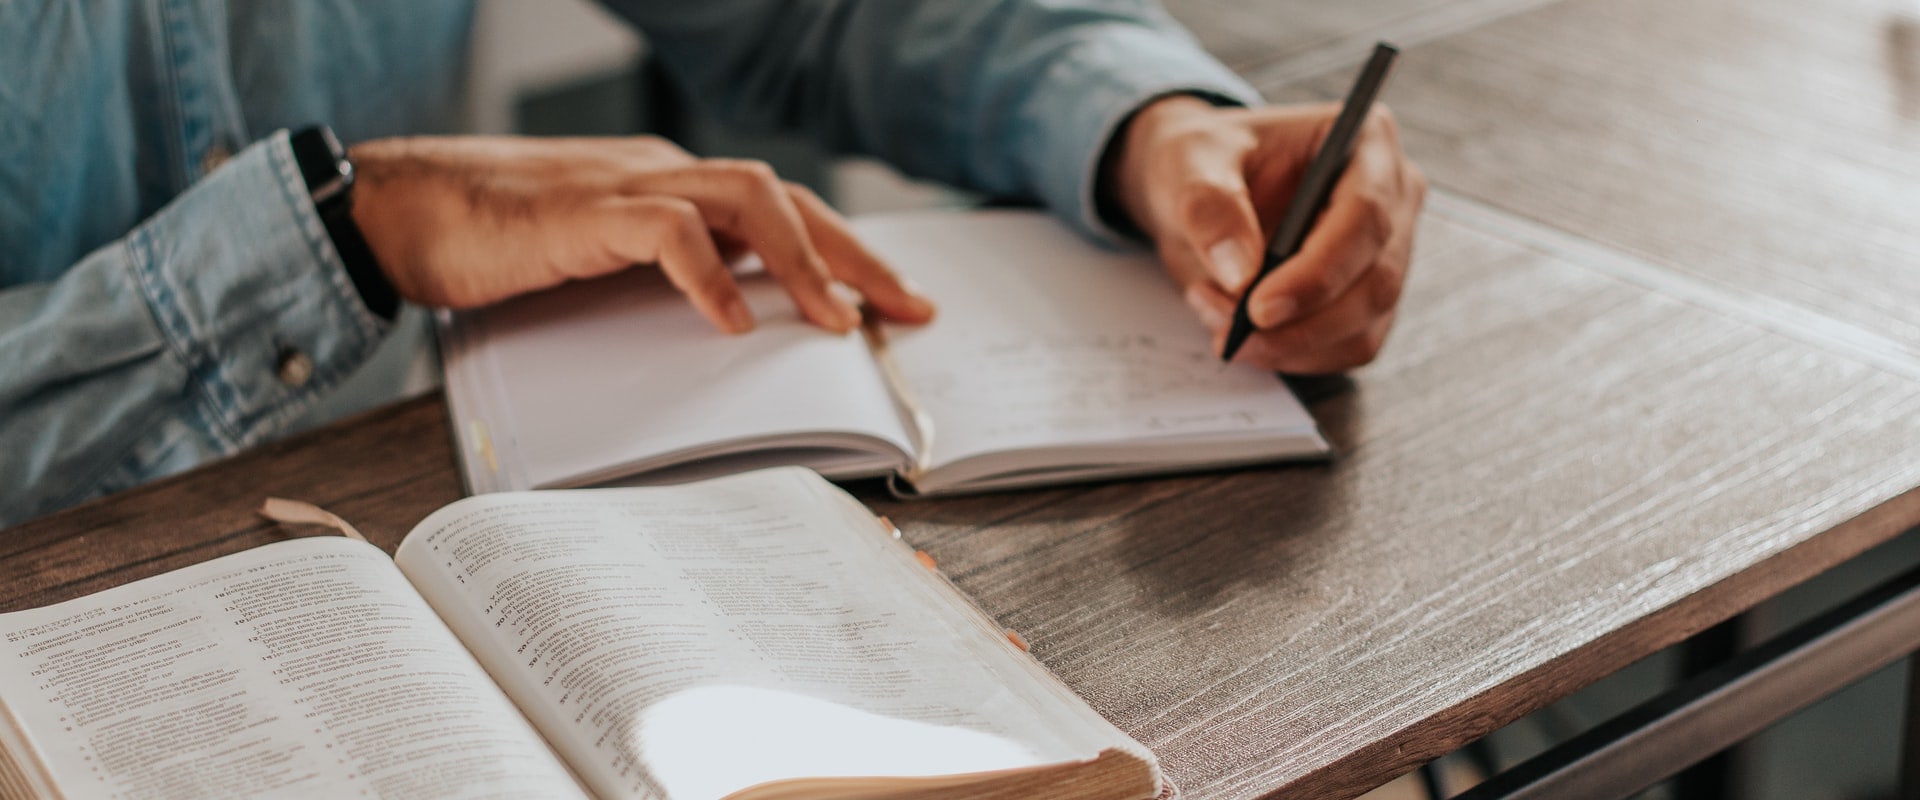 Who is bible study fellowship?